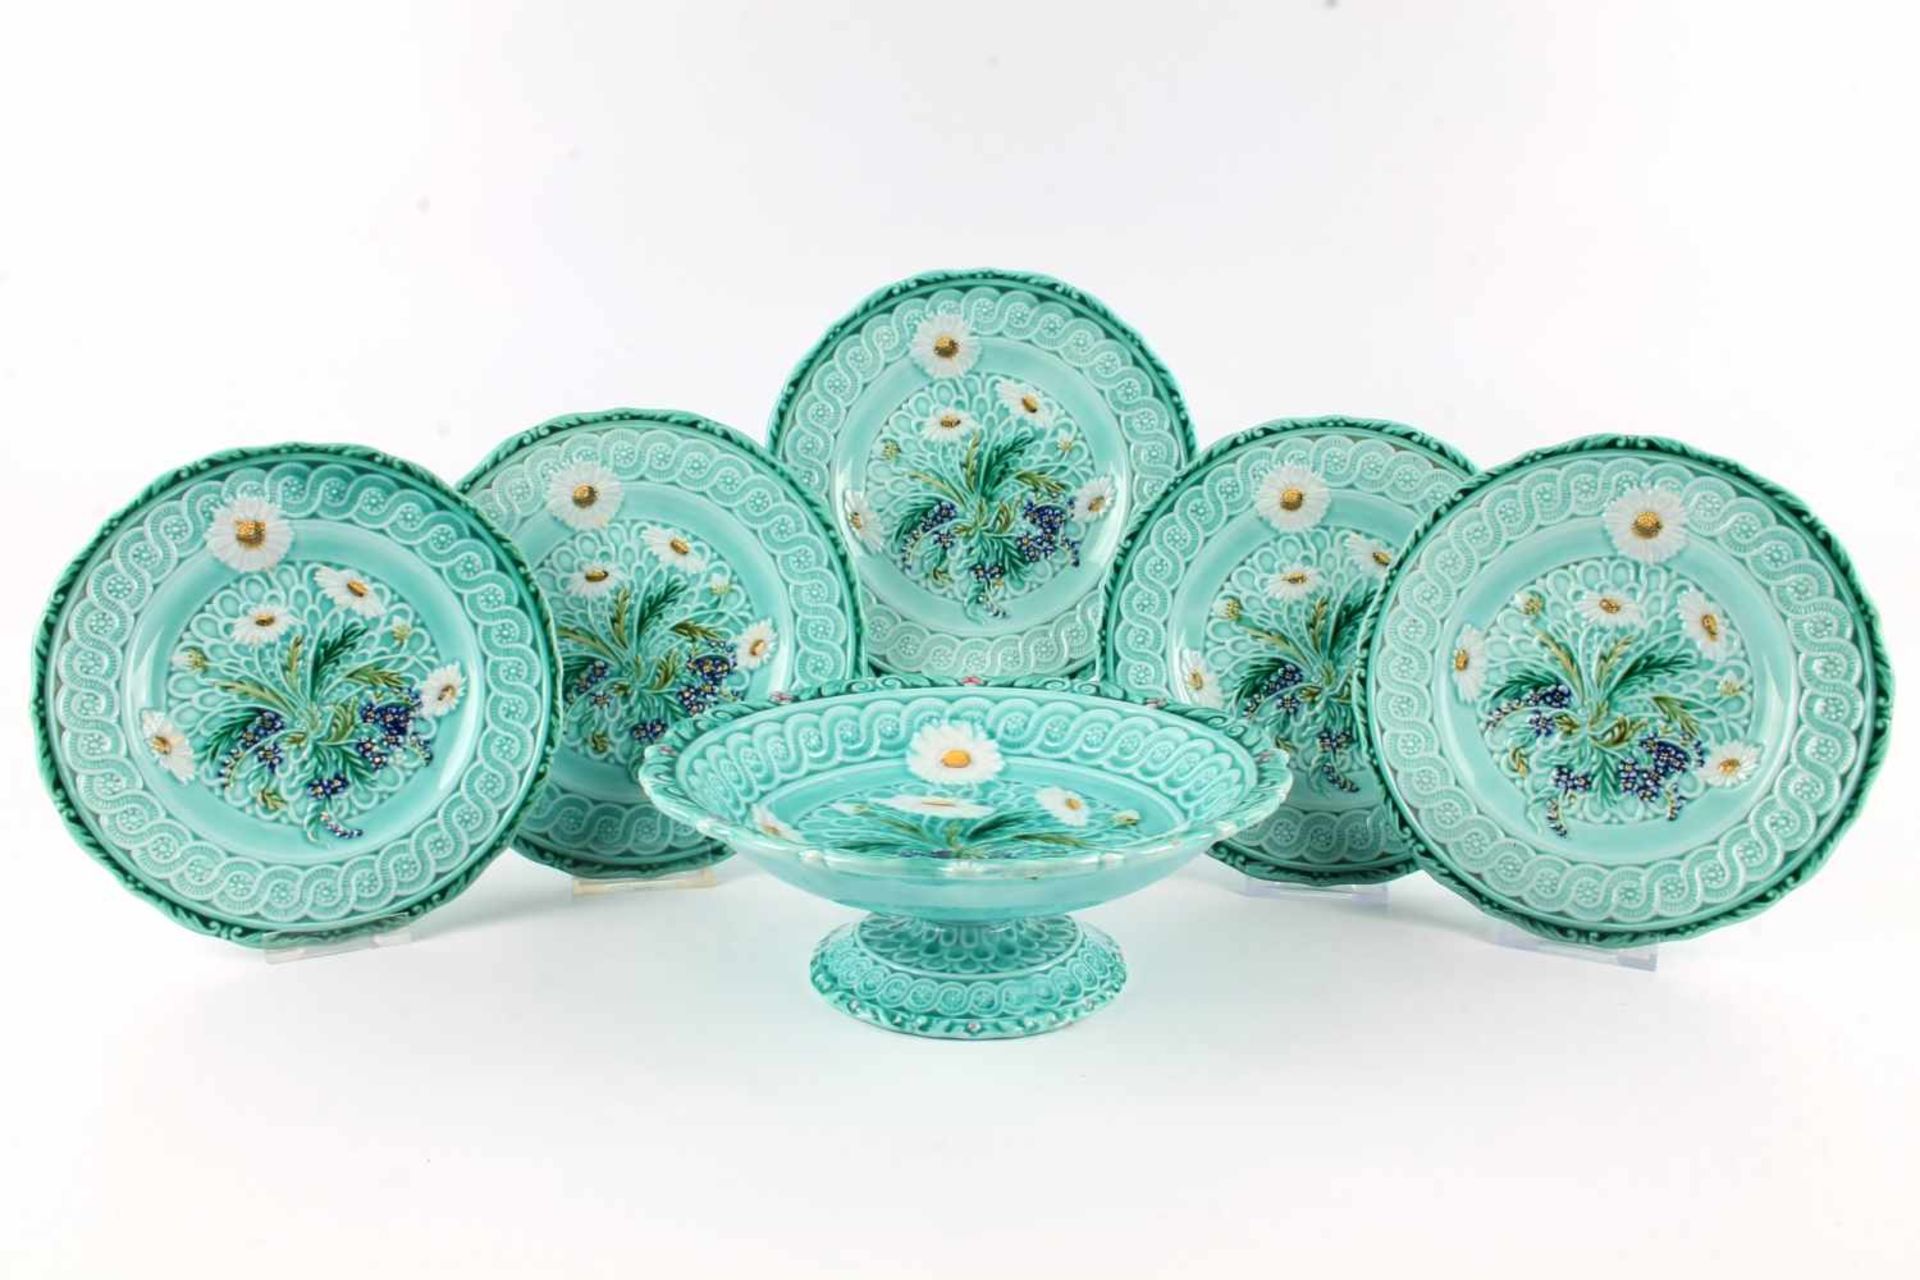 Villeroy & Boch Jugendstil Tafelaufsatz mit 5 Tellern, art nouveau bowl with 5 plates,